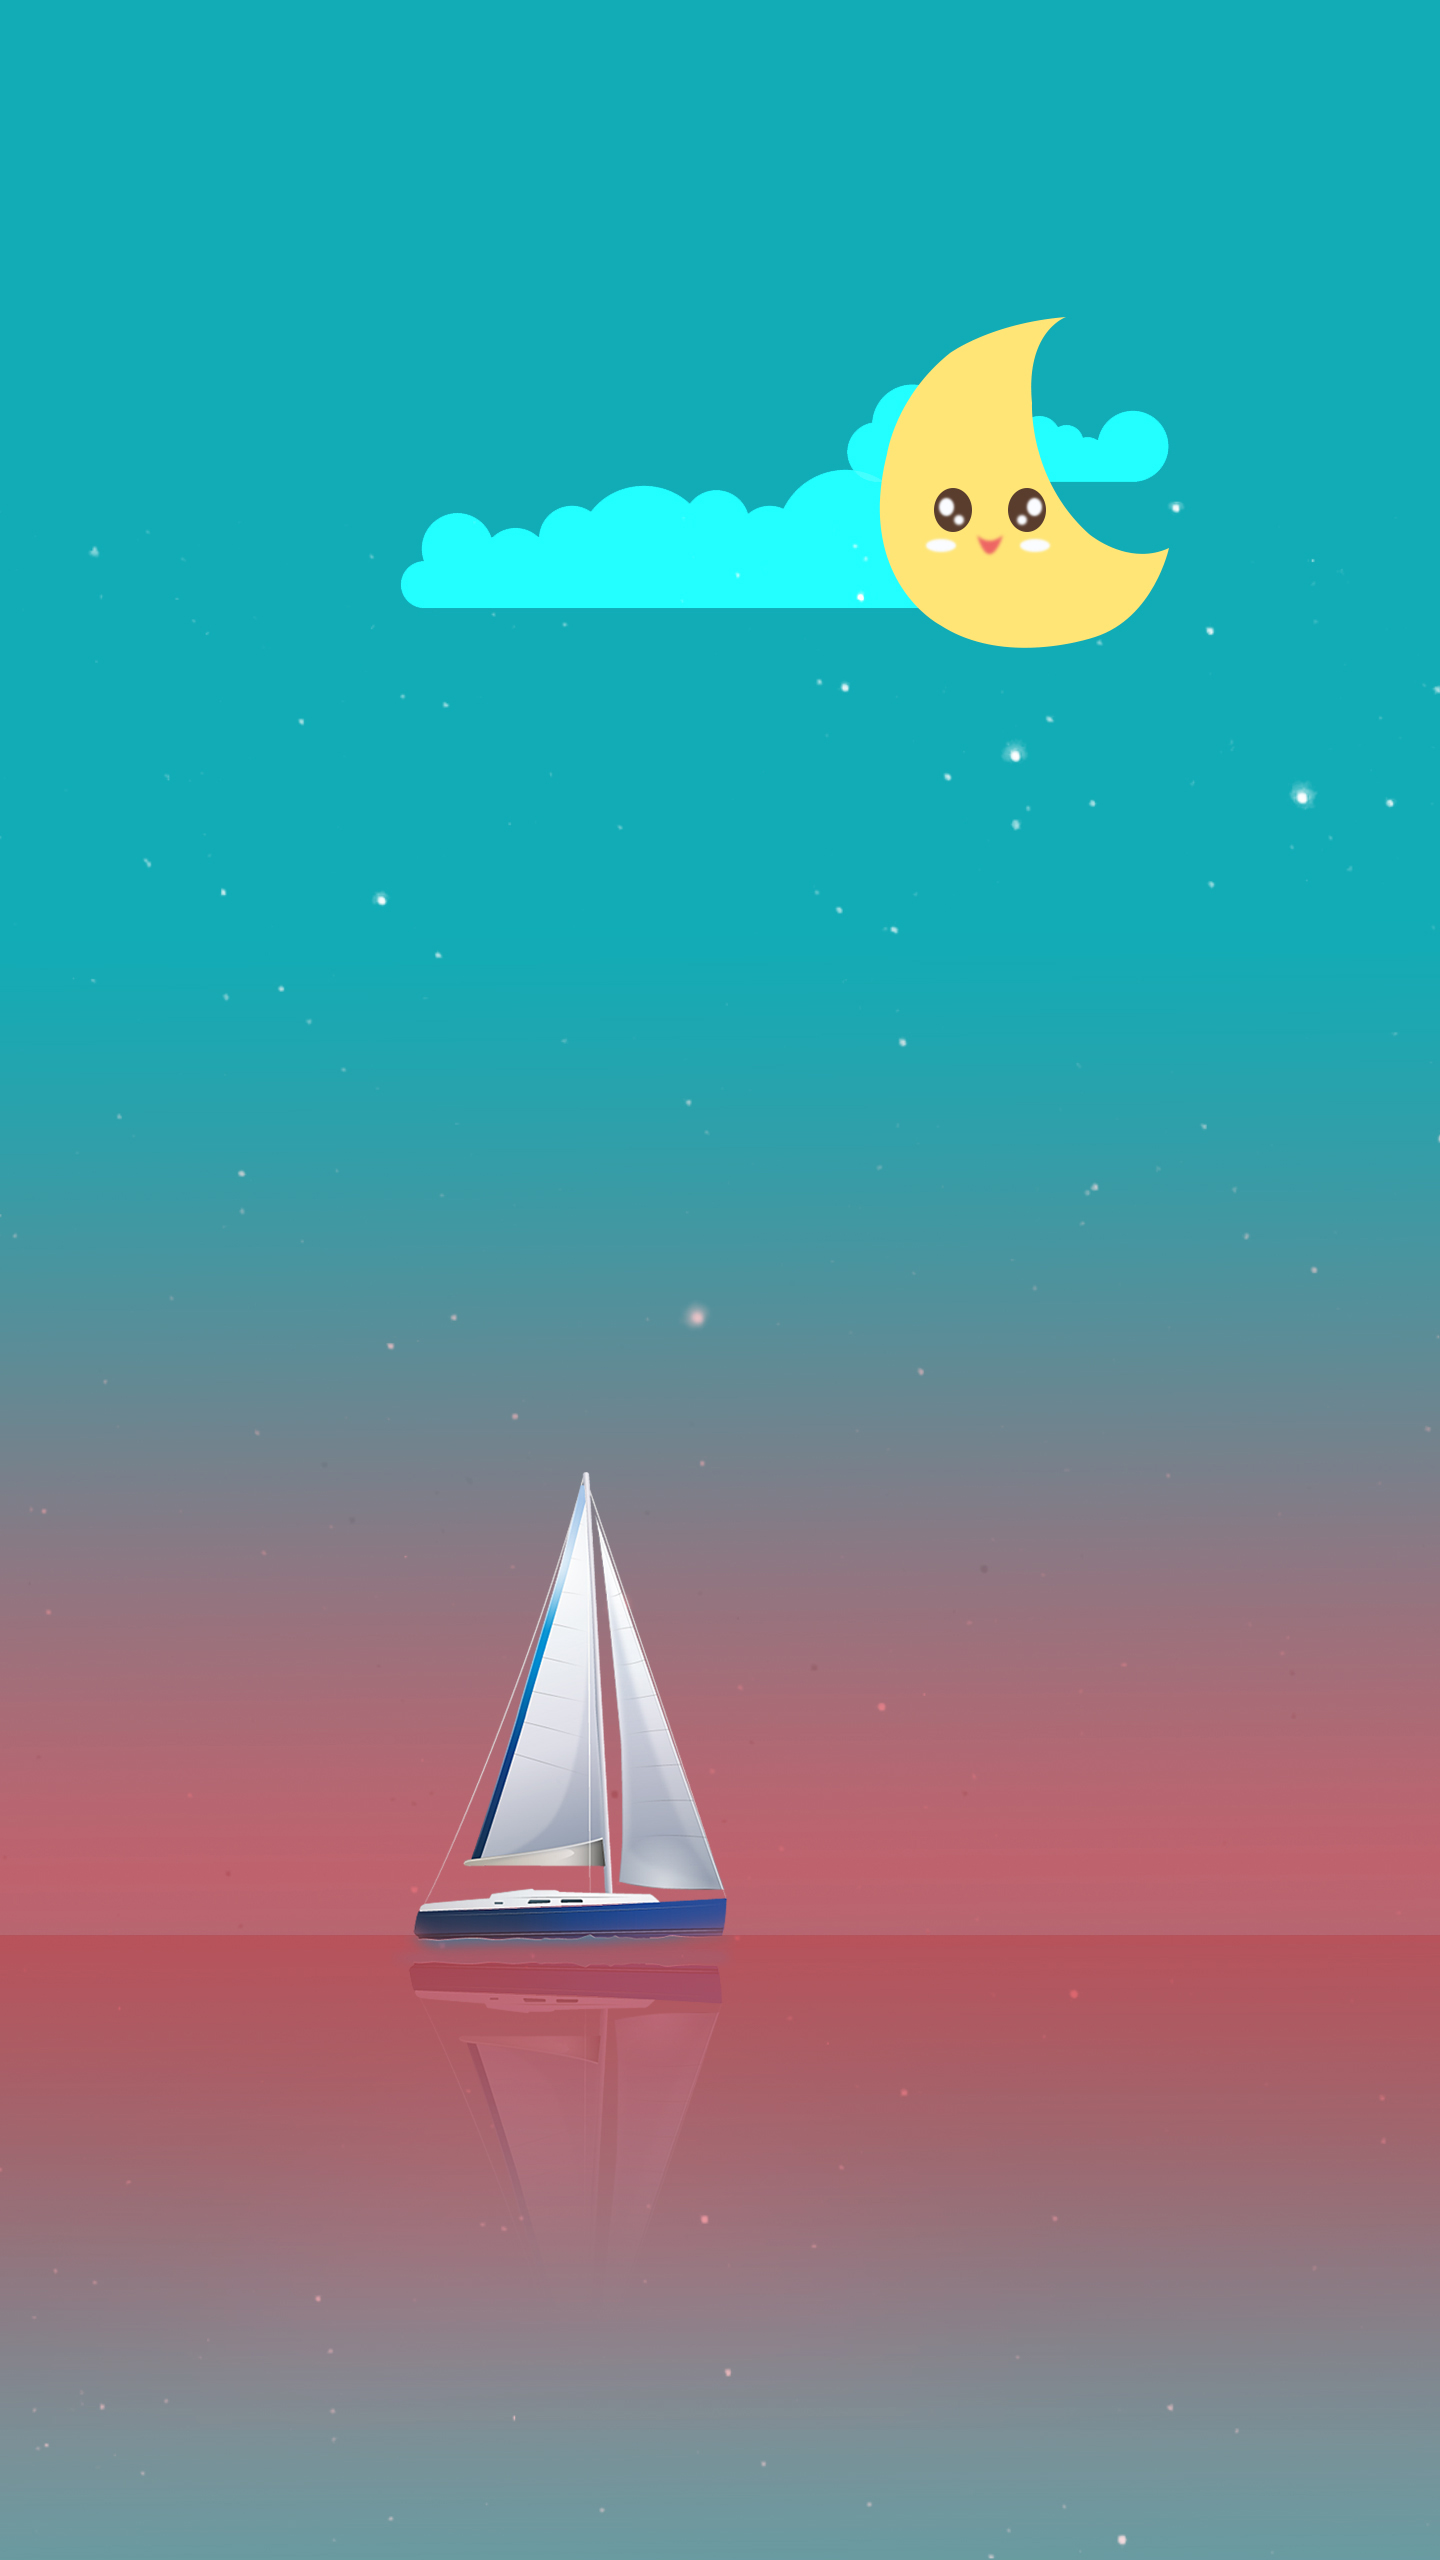 Free Wallpaper Phone: Boat Wallpaper Galaxy S7 Edge